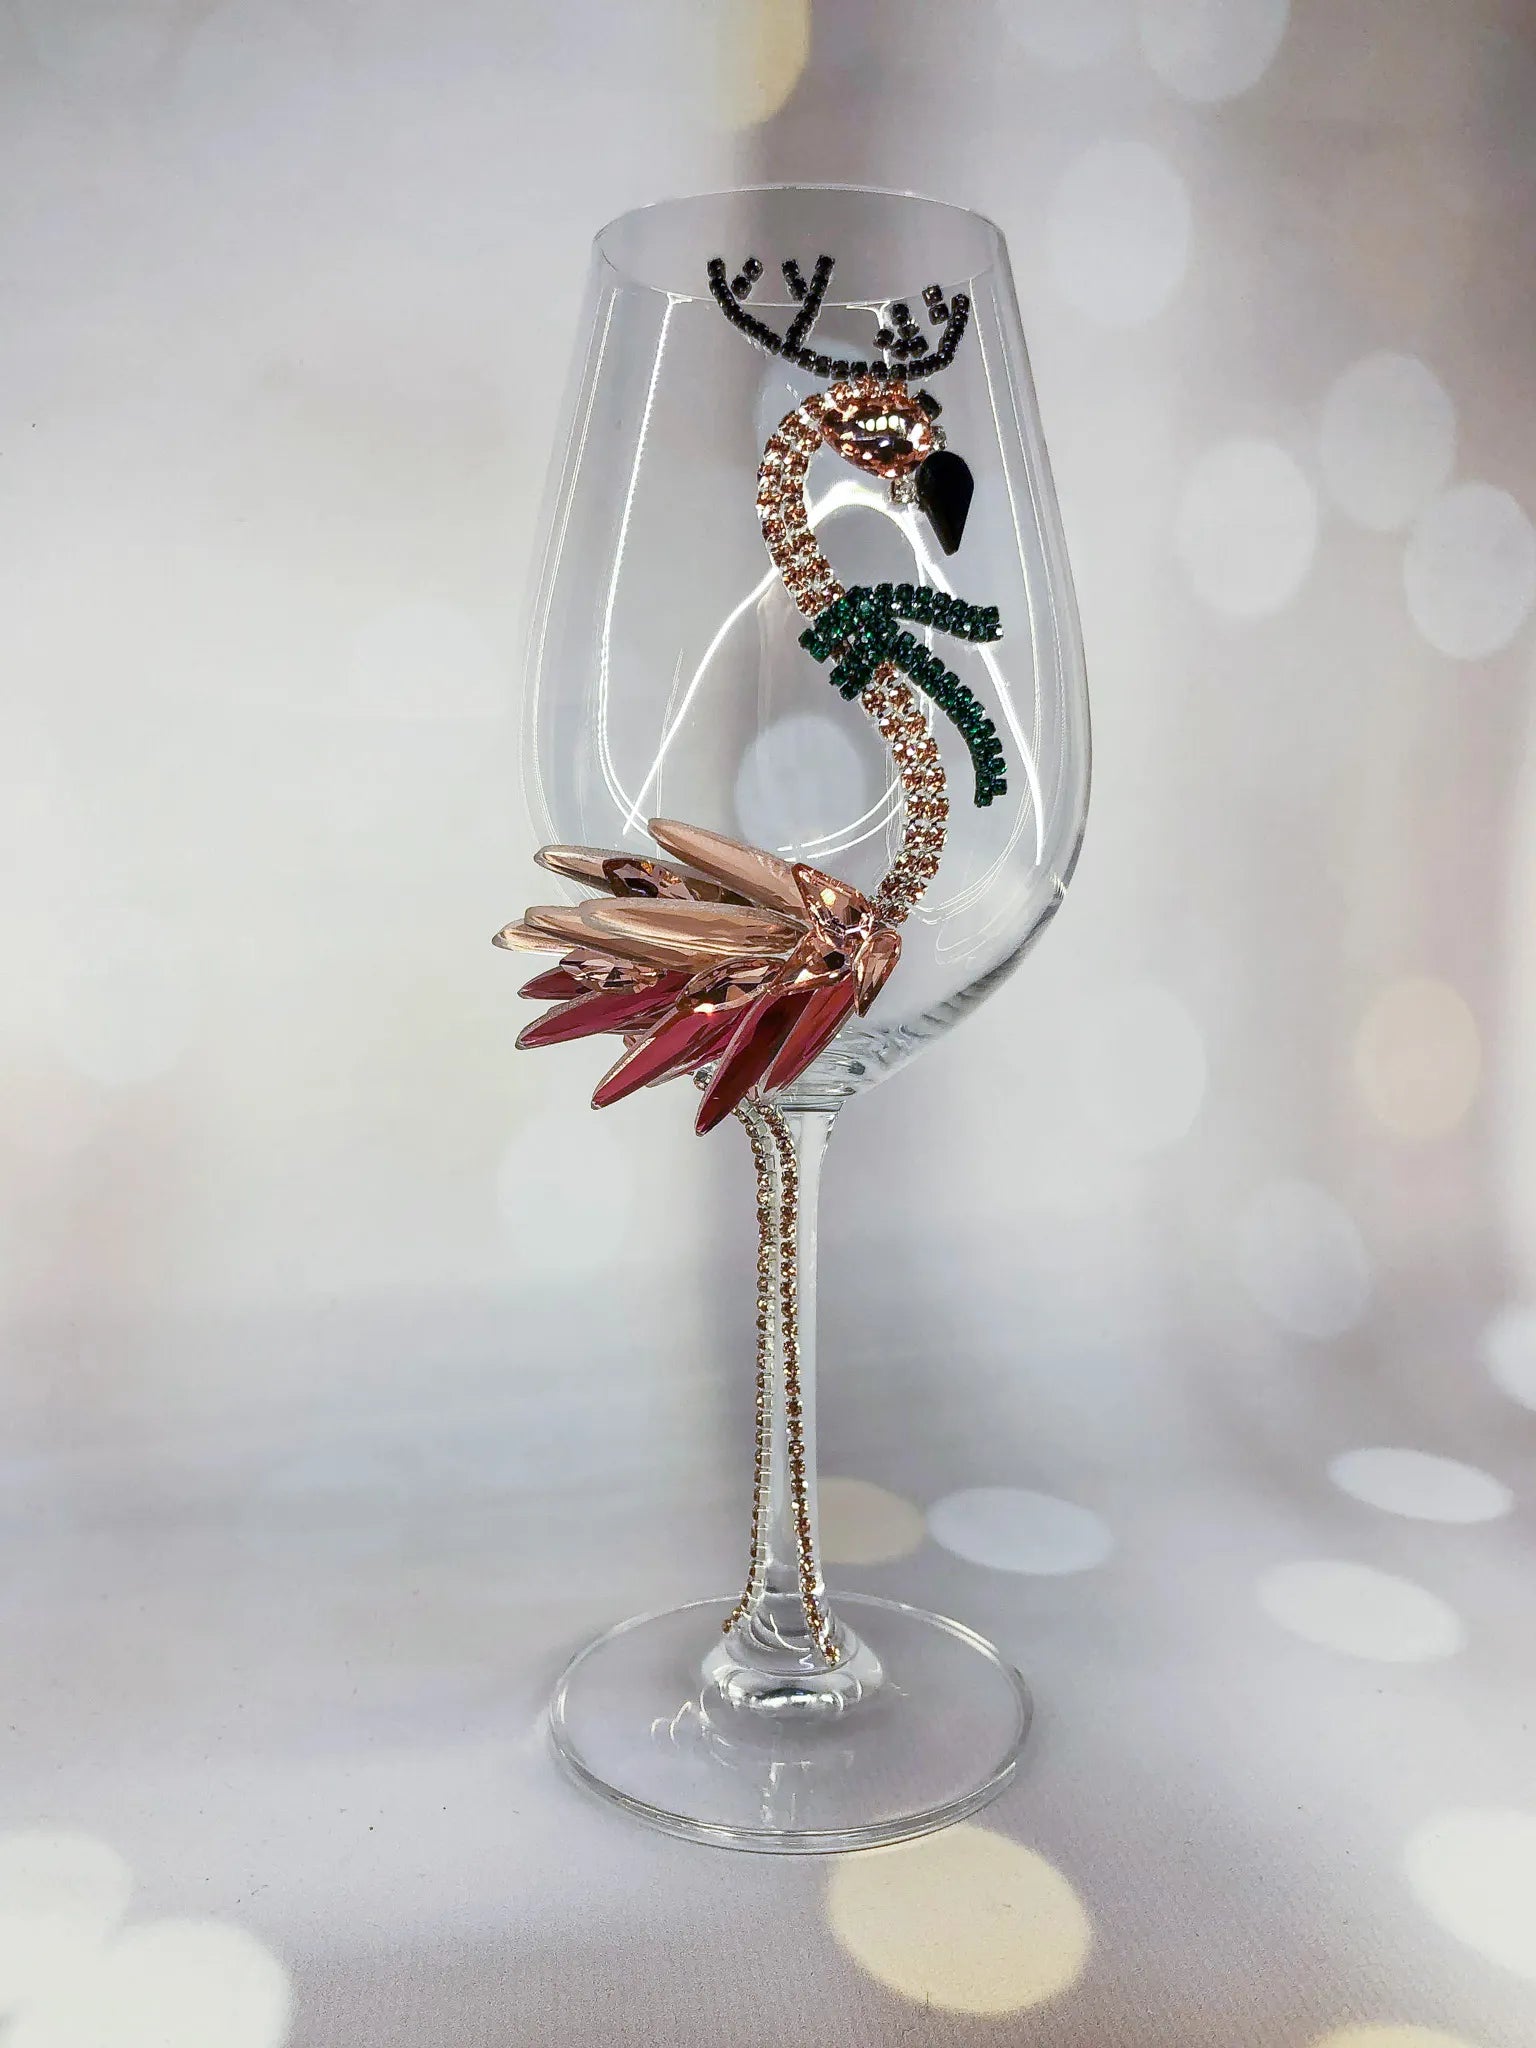 Mystical flamingo-themed drinkware